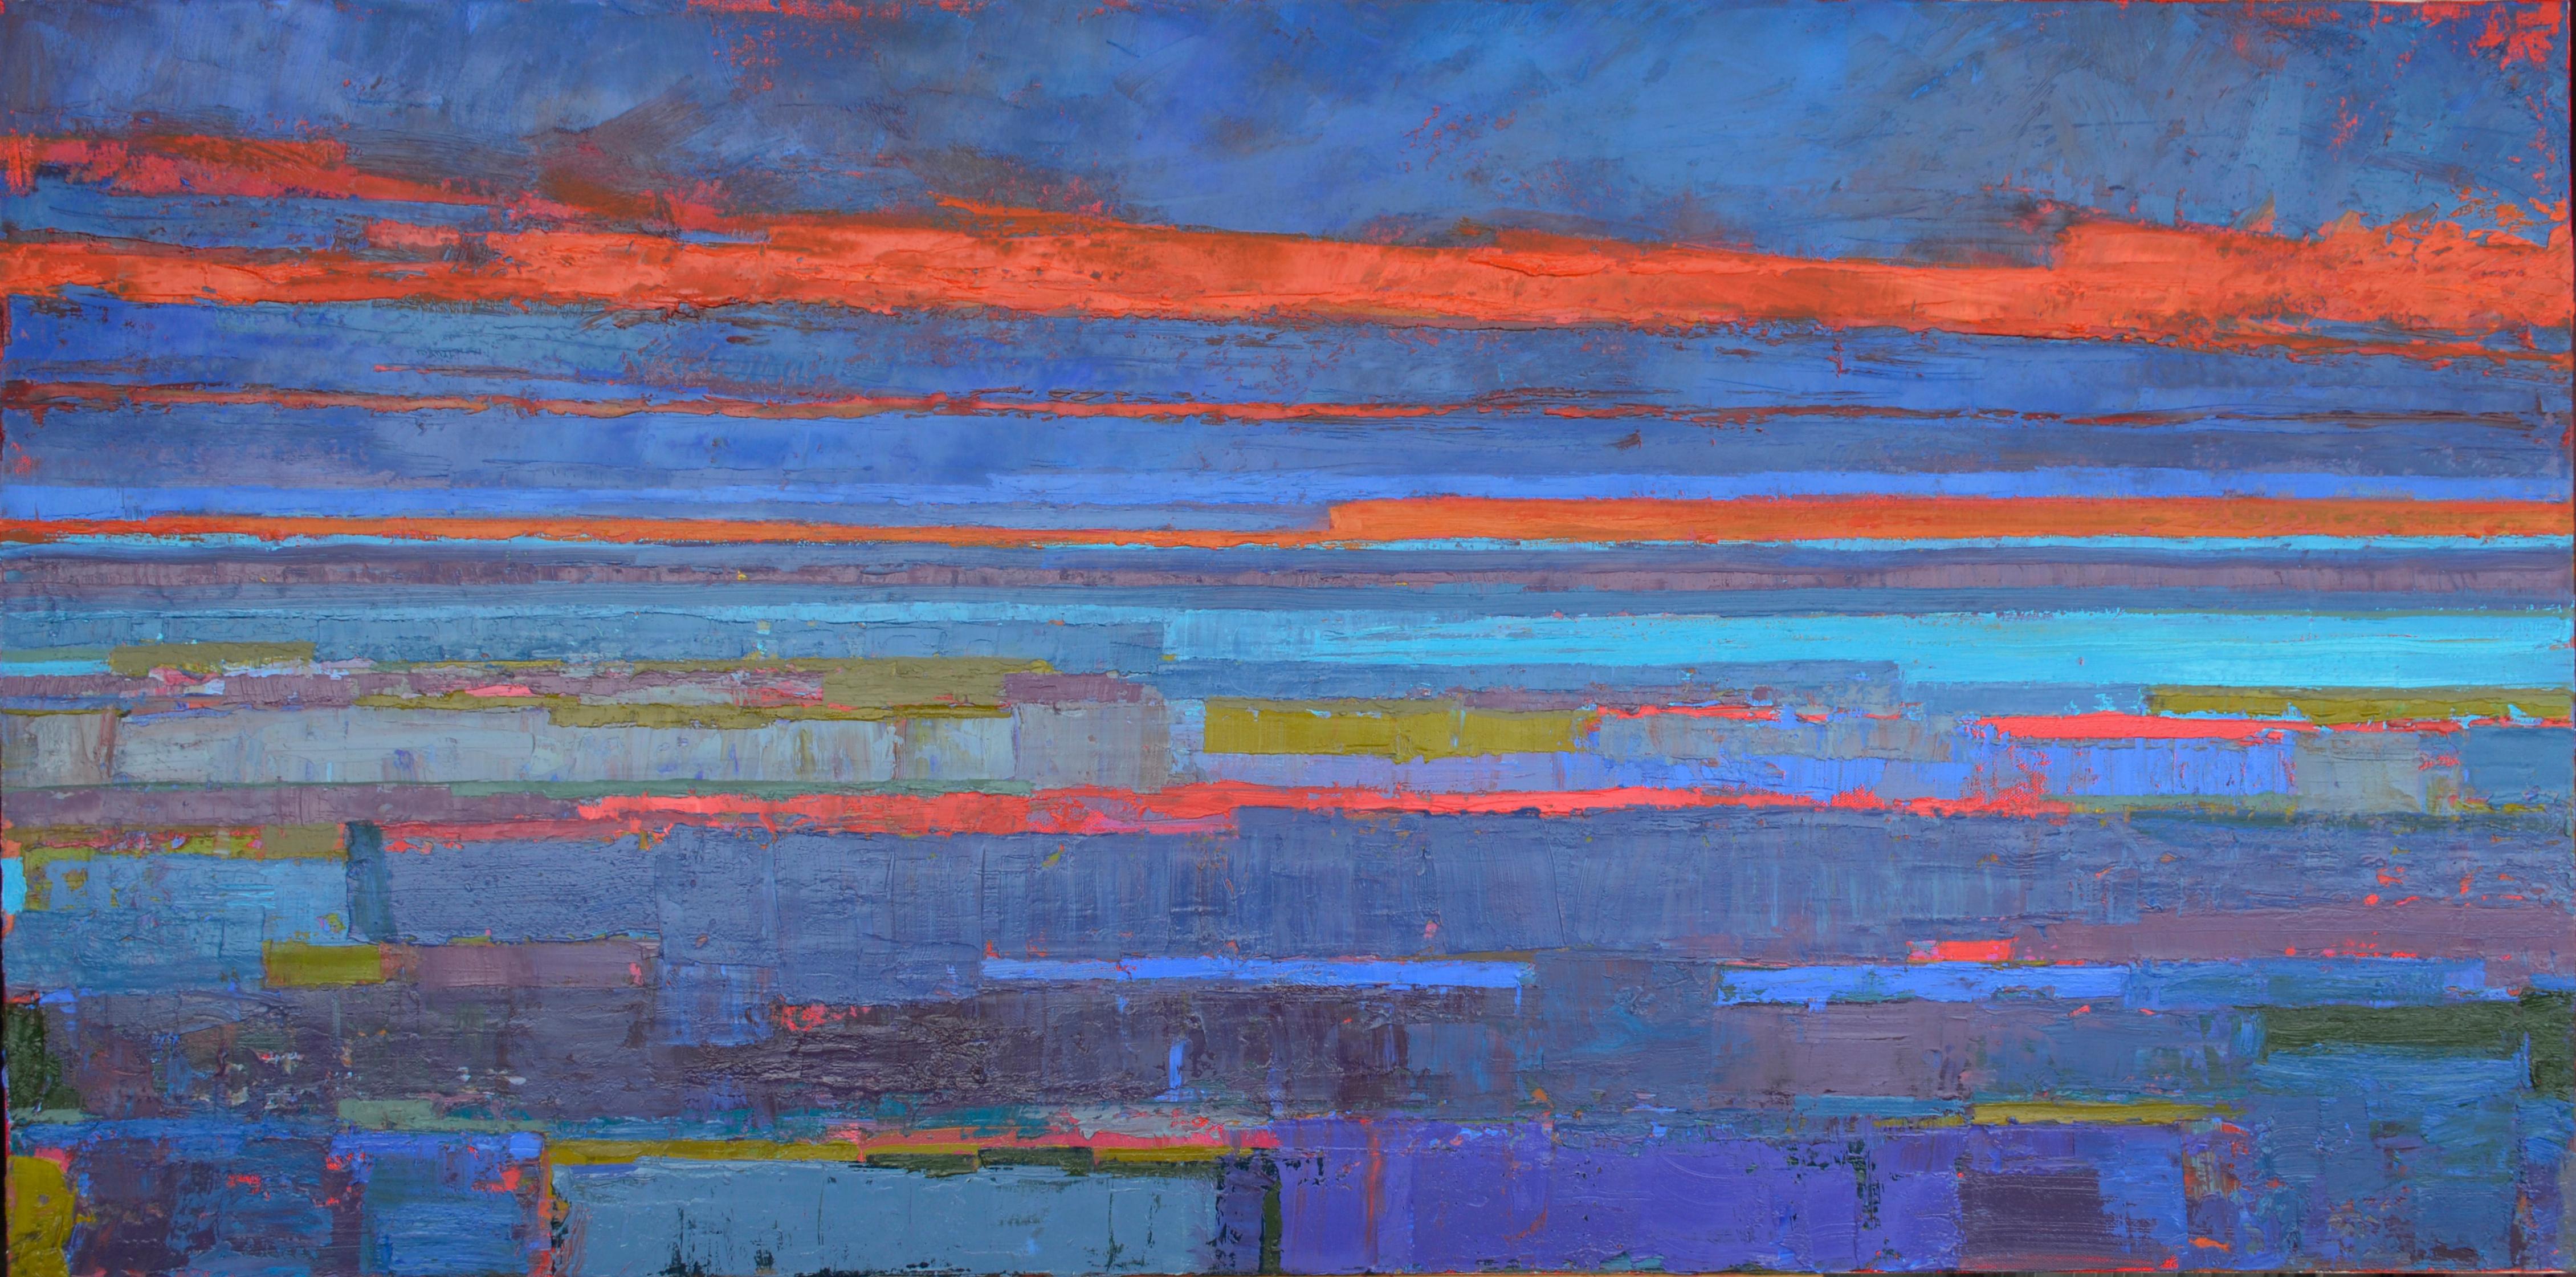 Srinivas Kathoju Abstract Painting - Ice Blue Lake and the Horizon, Abstract Oil Painting